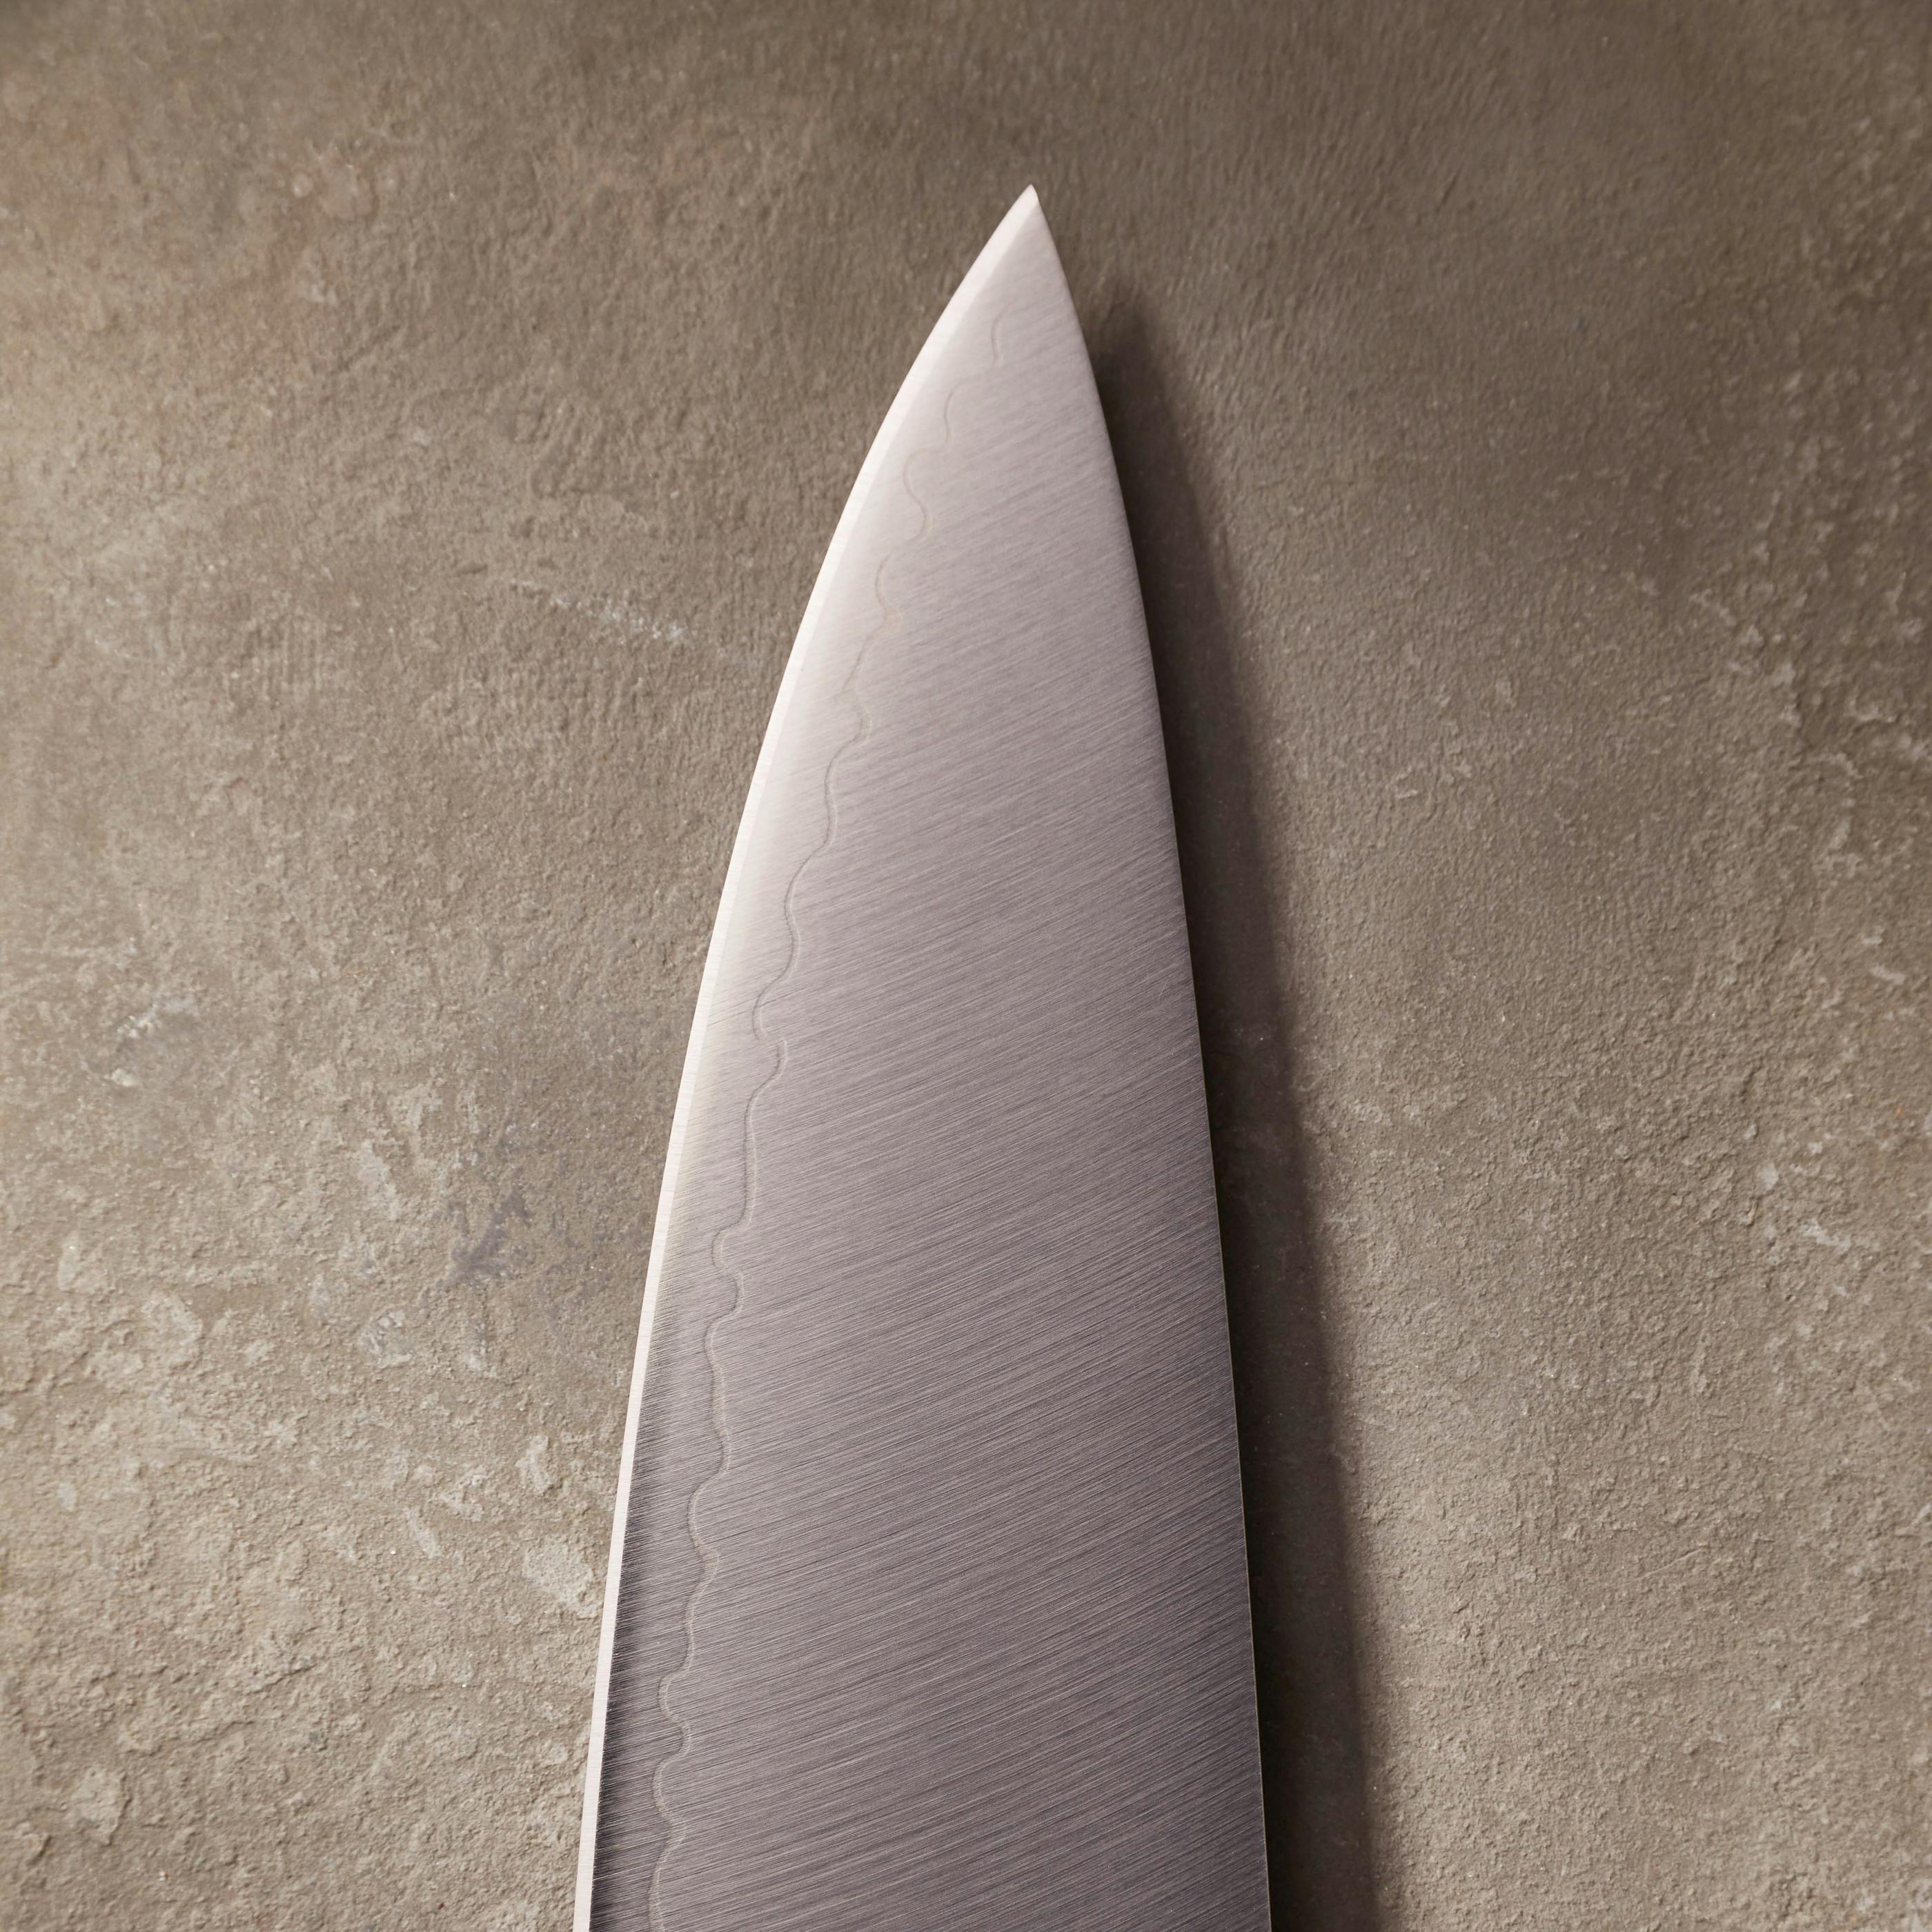 FjBoTQCPKi Material 8 Chef Knife 2 Original ?auto=format%2C Compress&crop=top&fit=clip&cs=tinysrgb&ixlib=react 9.5.2&w=2800